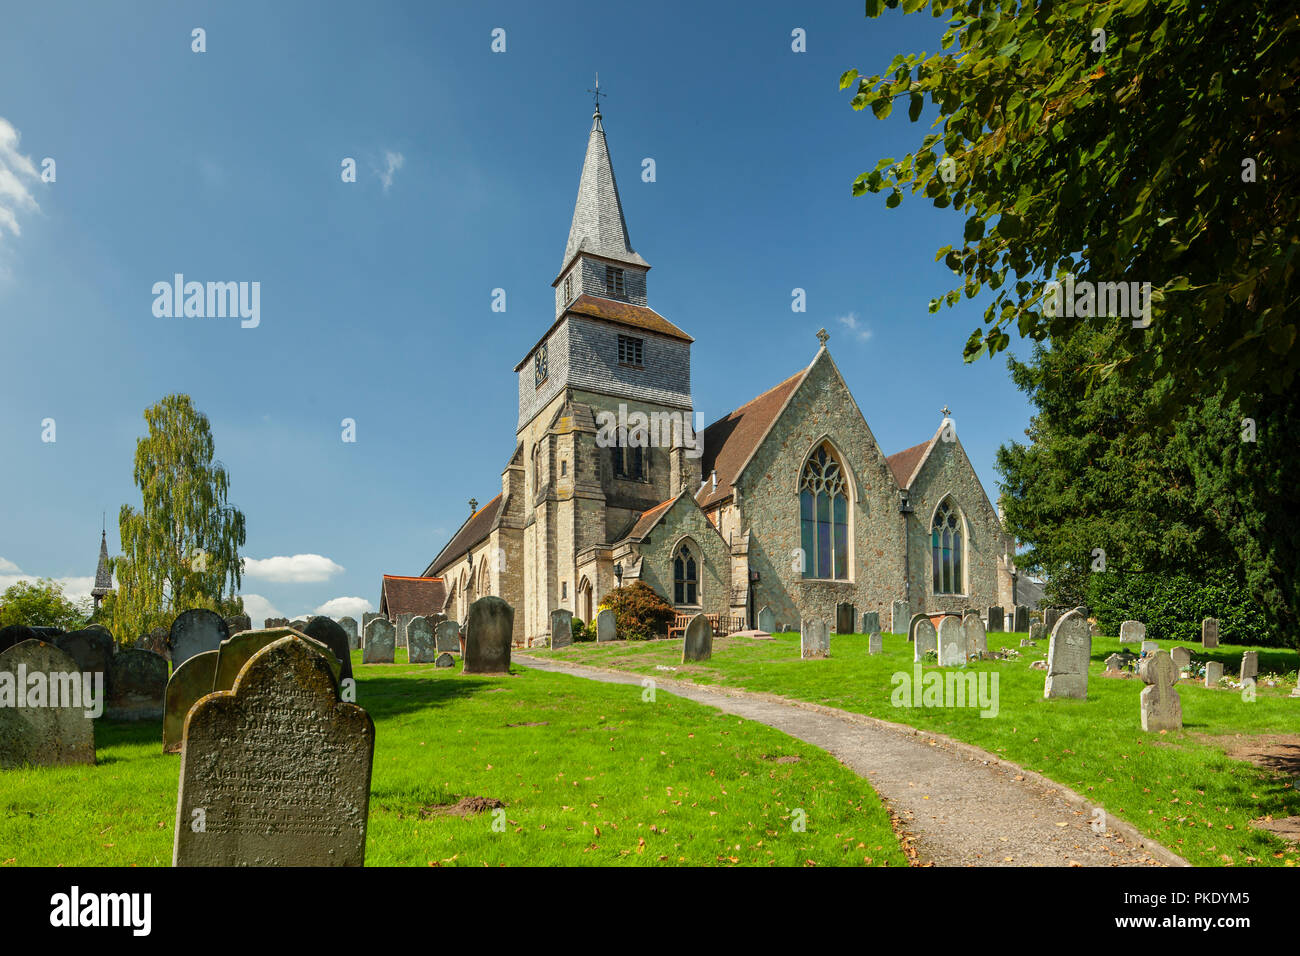 St Nicholas church in Godstone, Surrey. Stock Photo